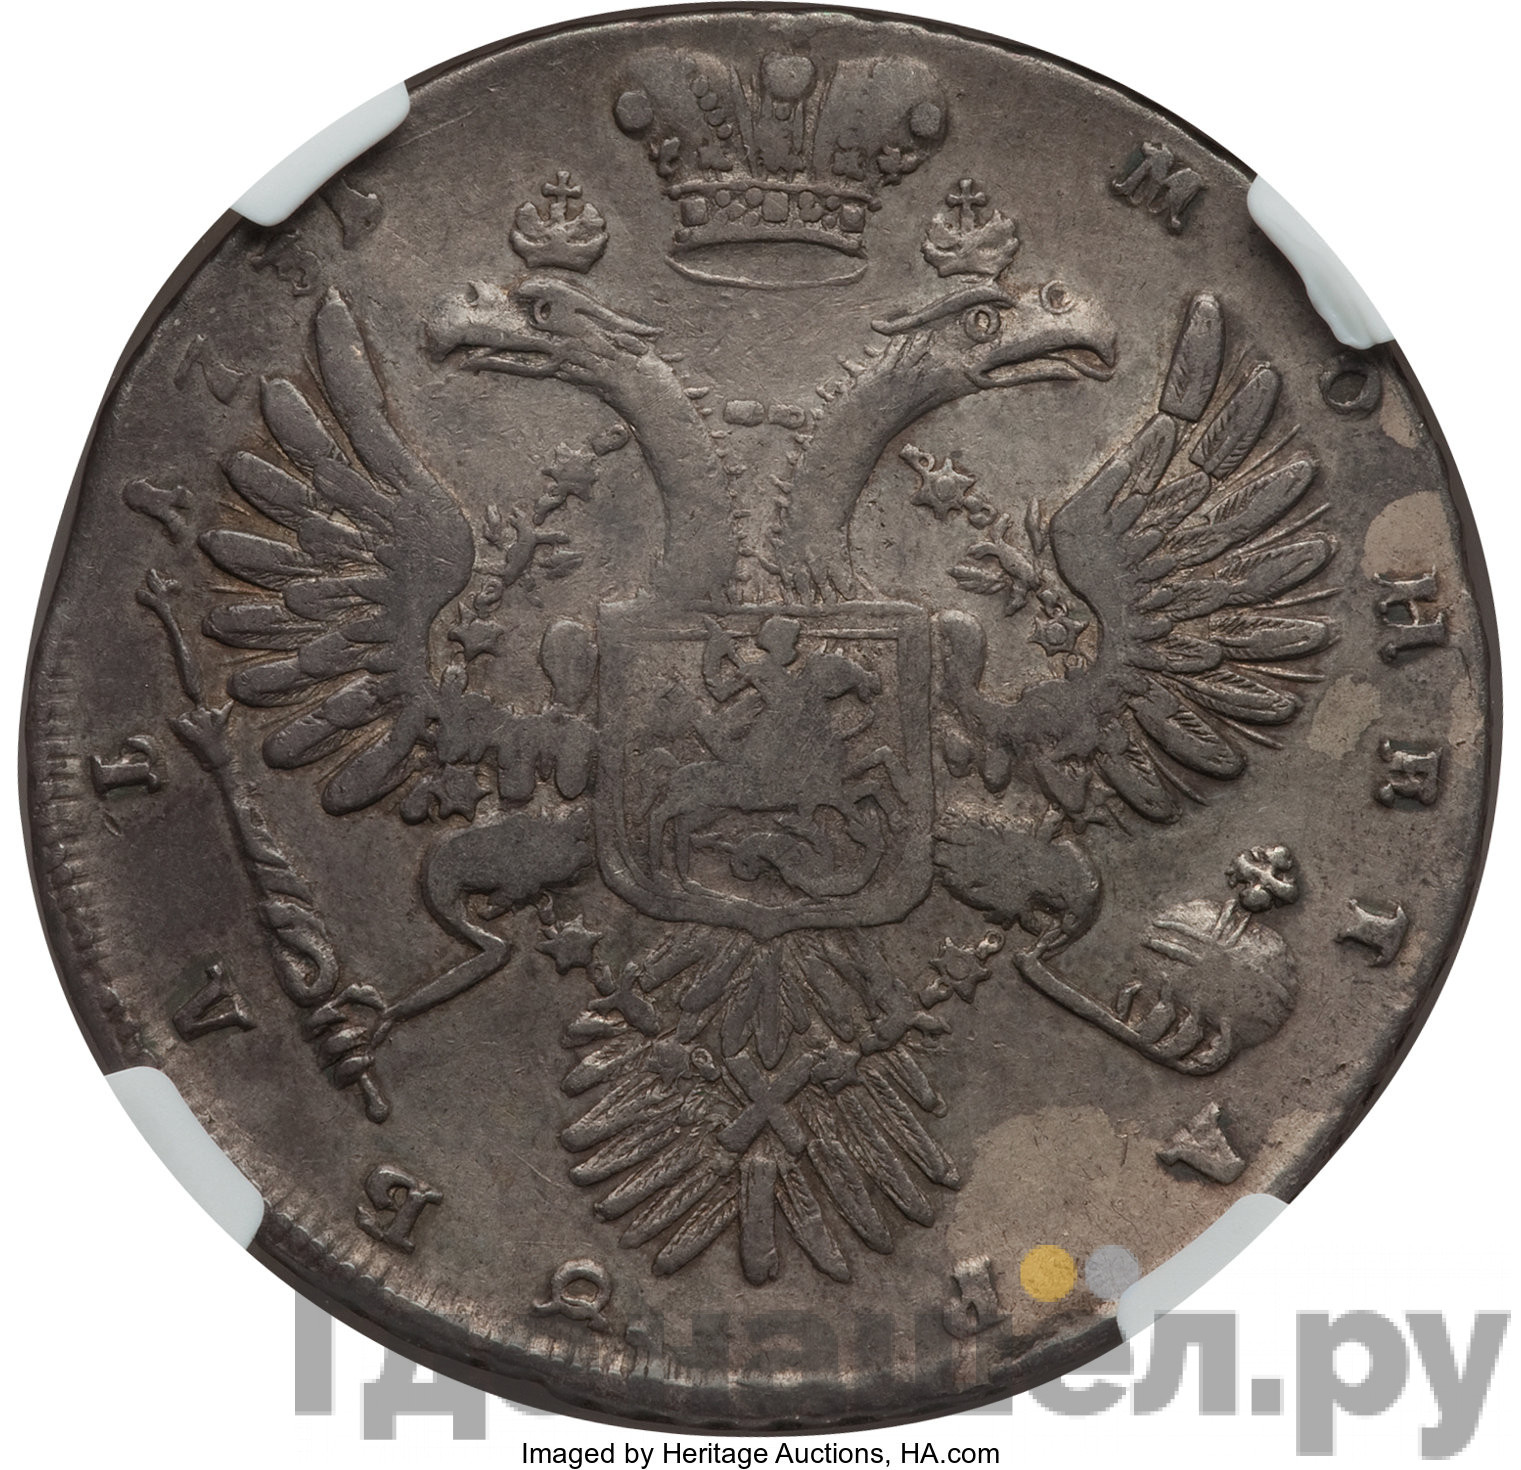 1 рубль 1731 года